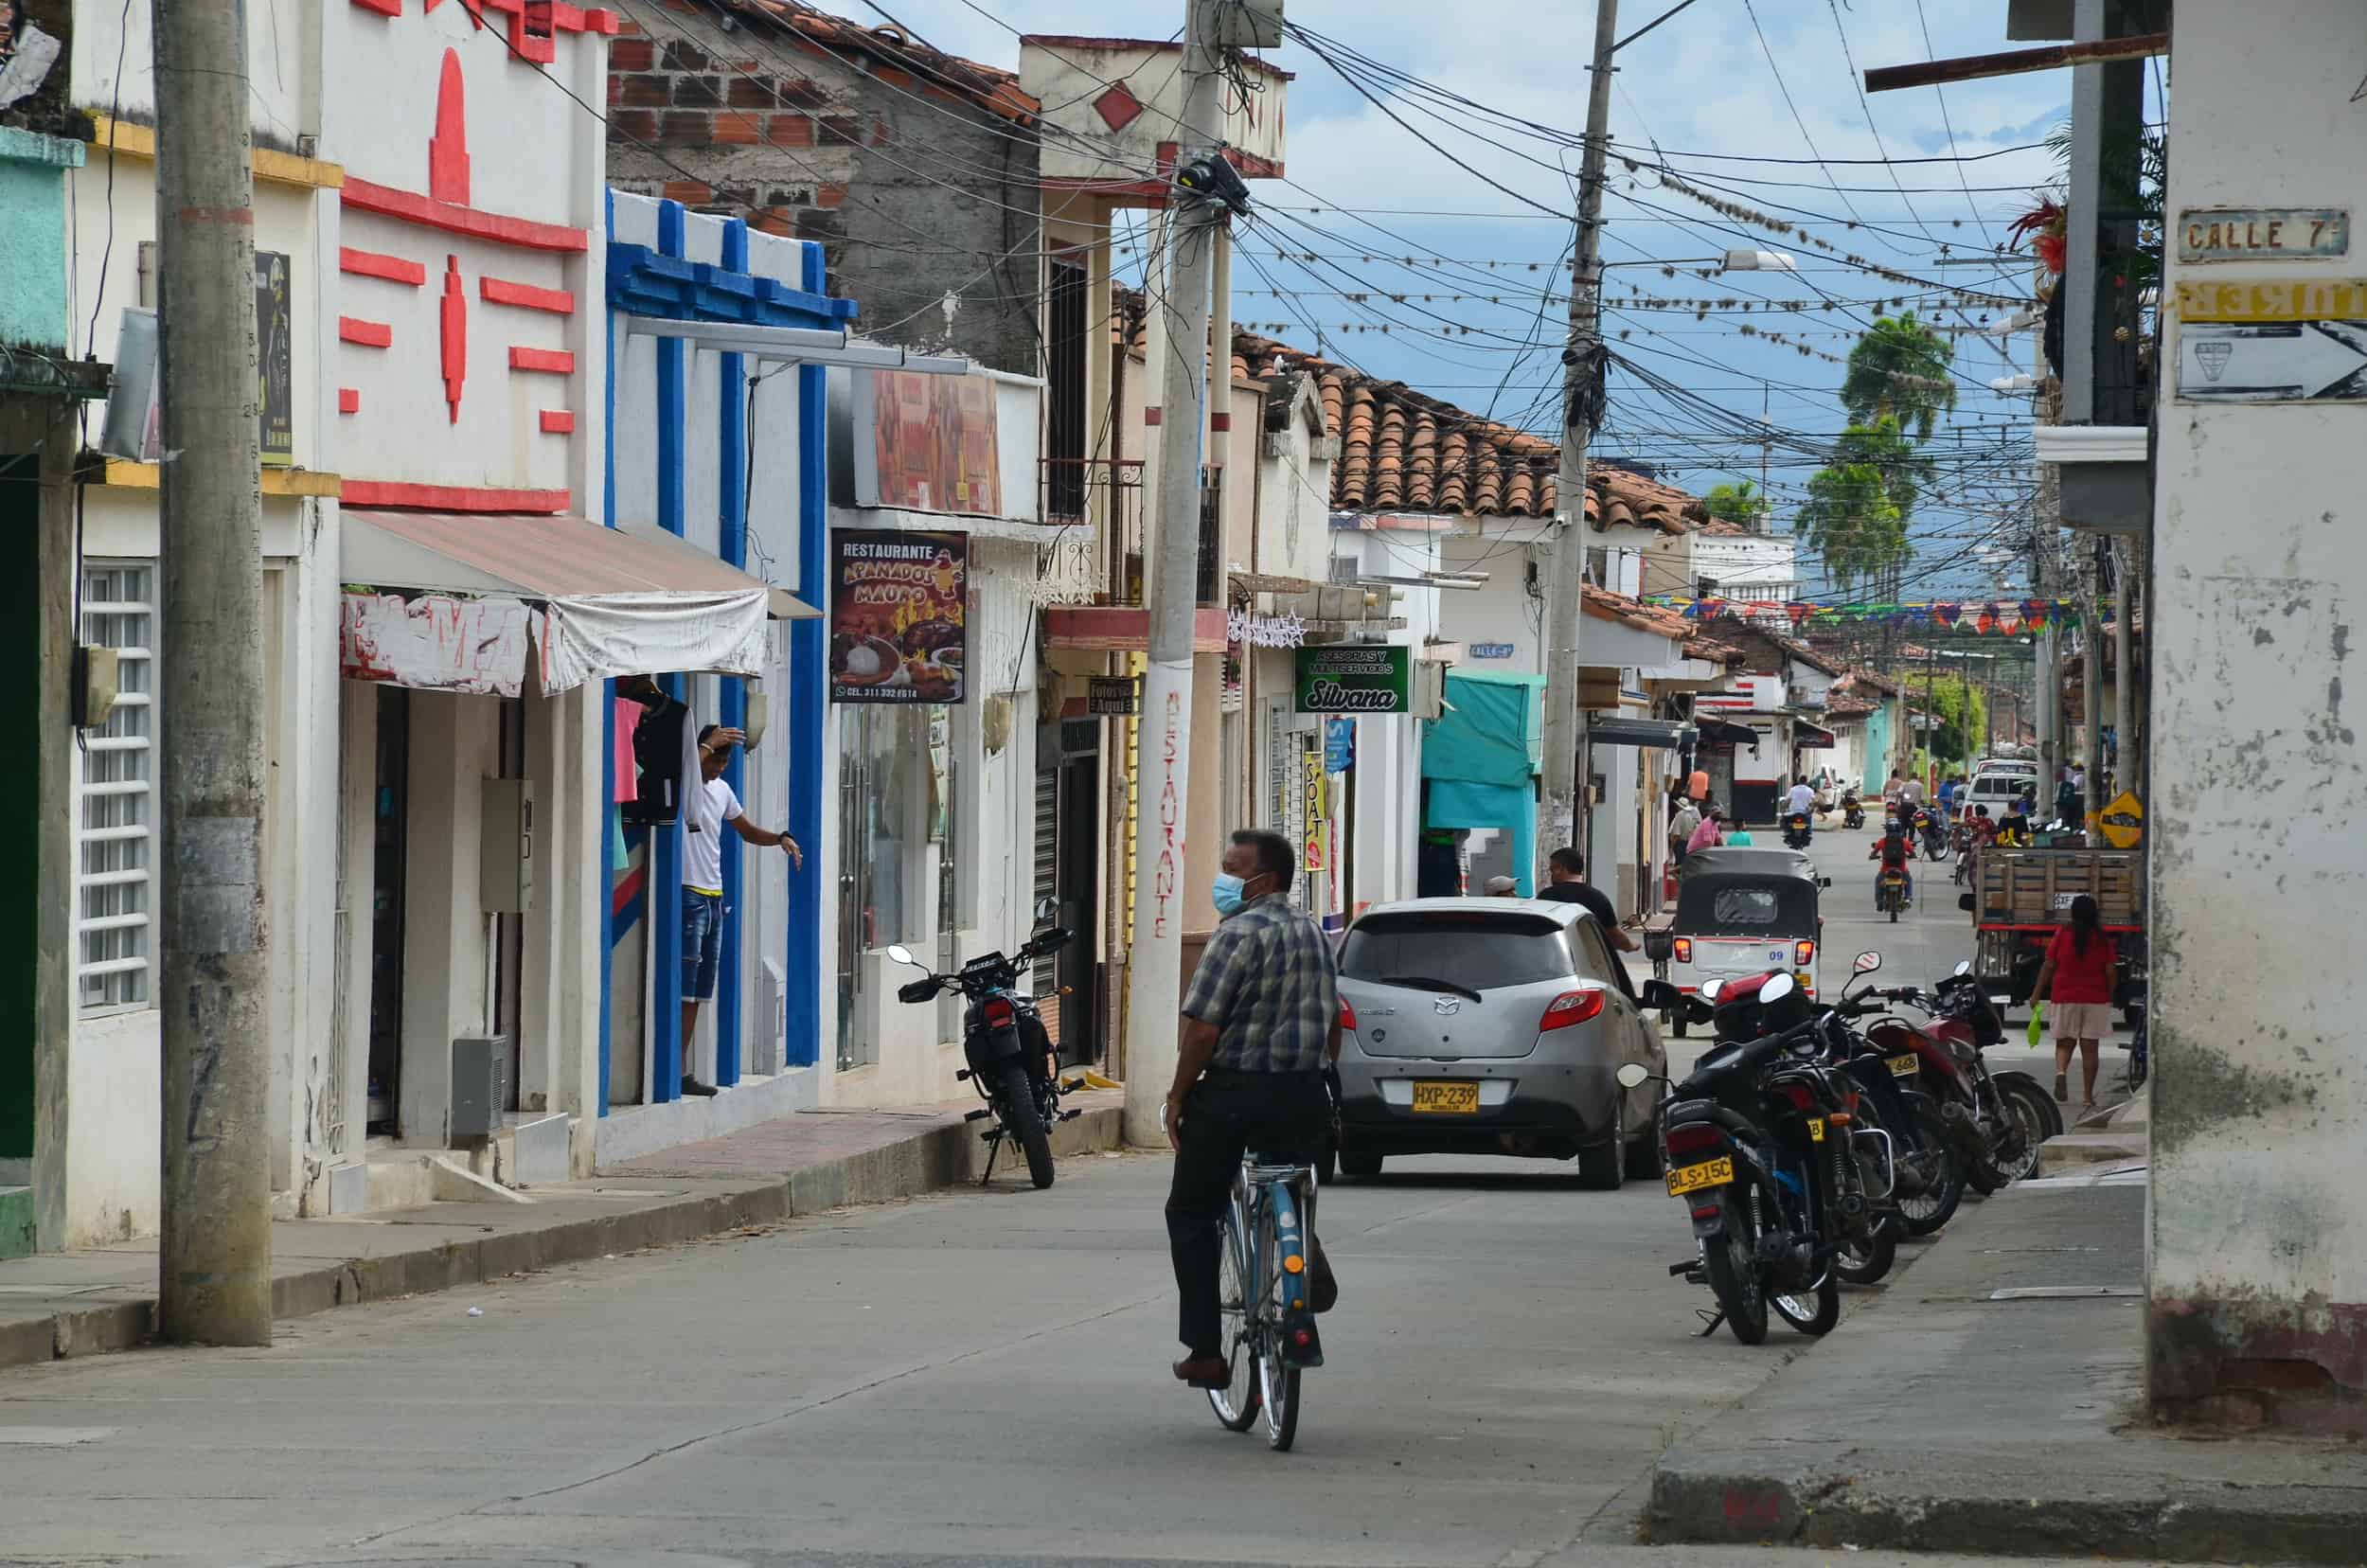 "Busy" street in Toro, Valle del Cauca, Colombia